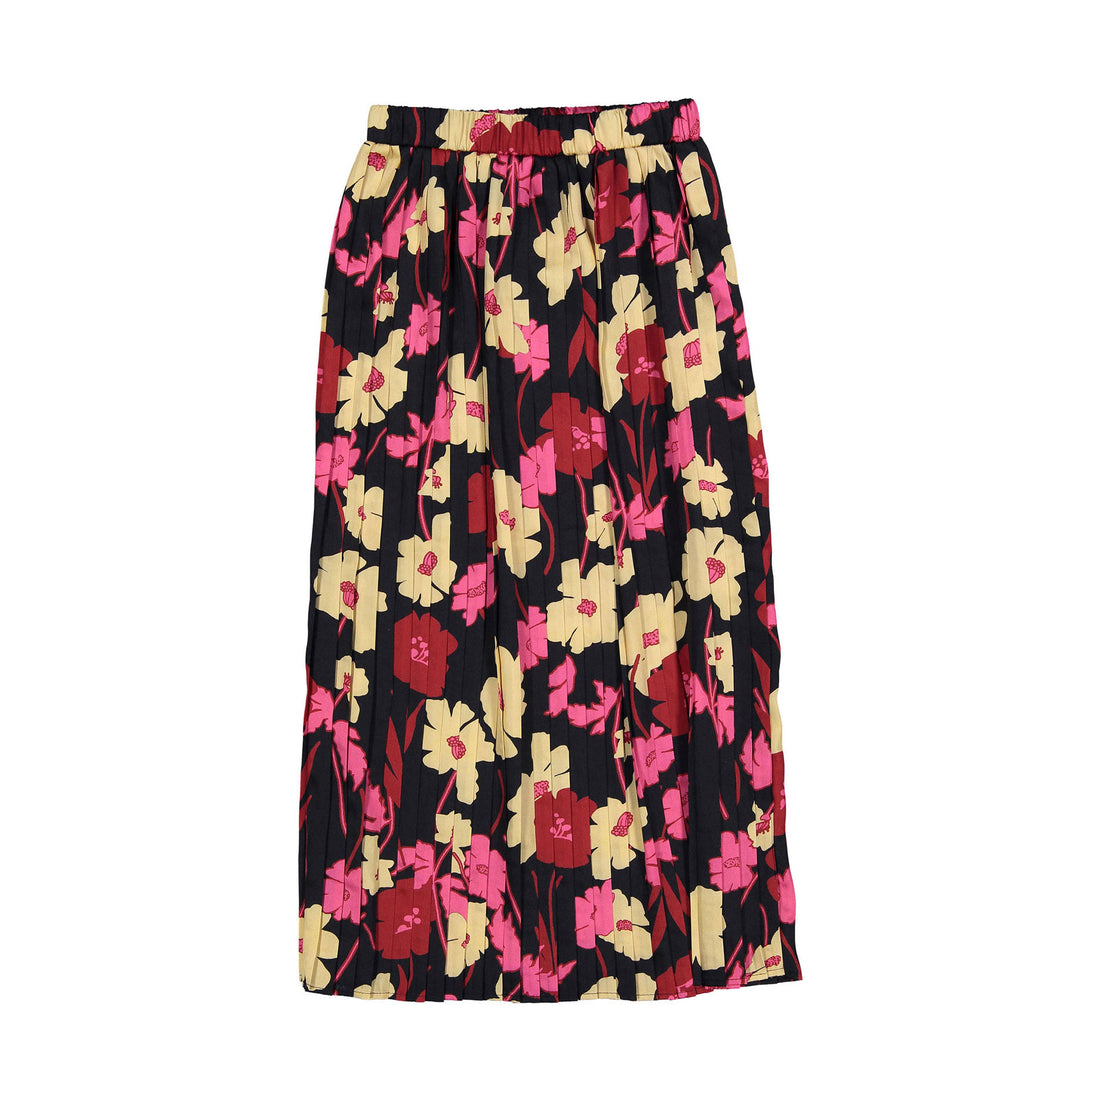 Christina Rohde Black/Fuchsia Floral Pleated Skirt